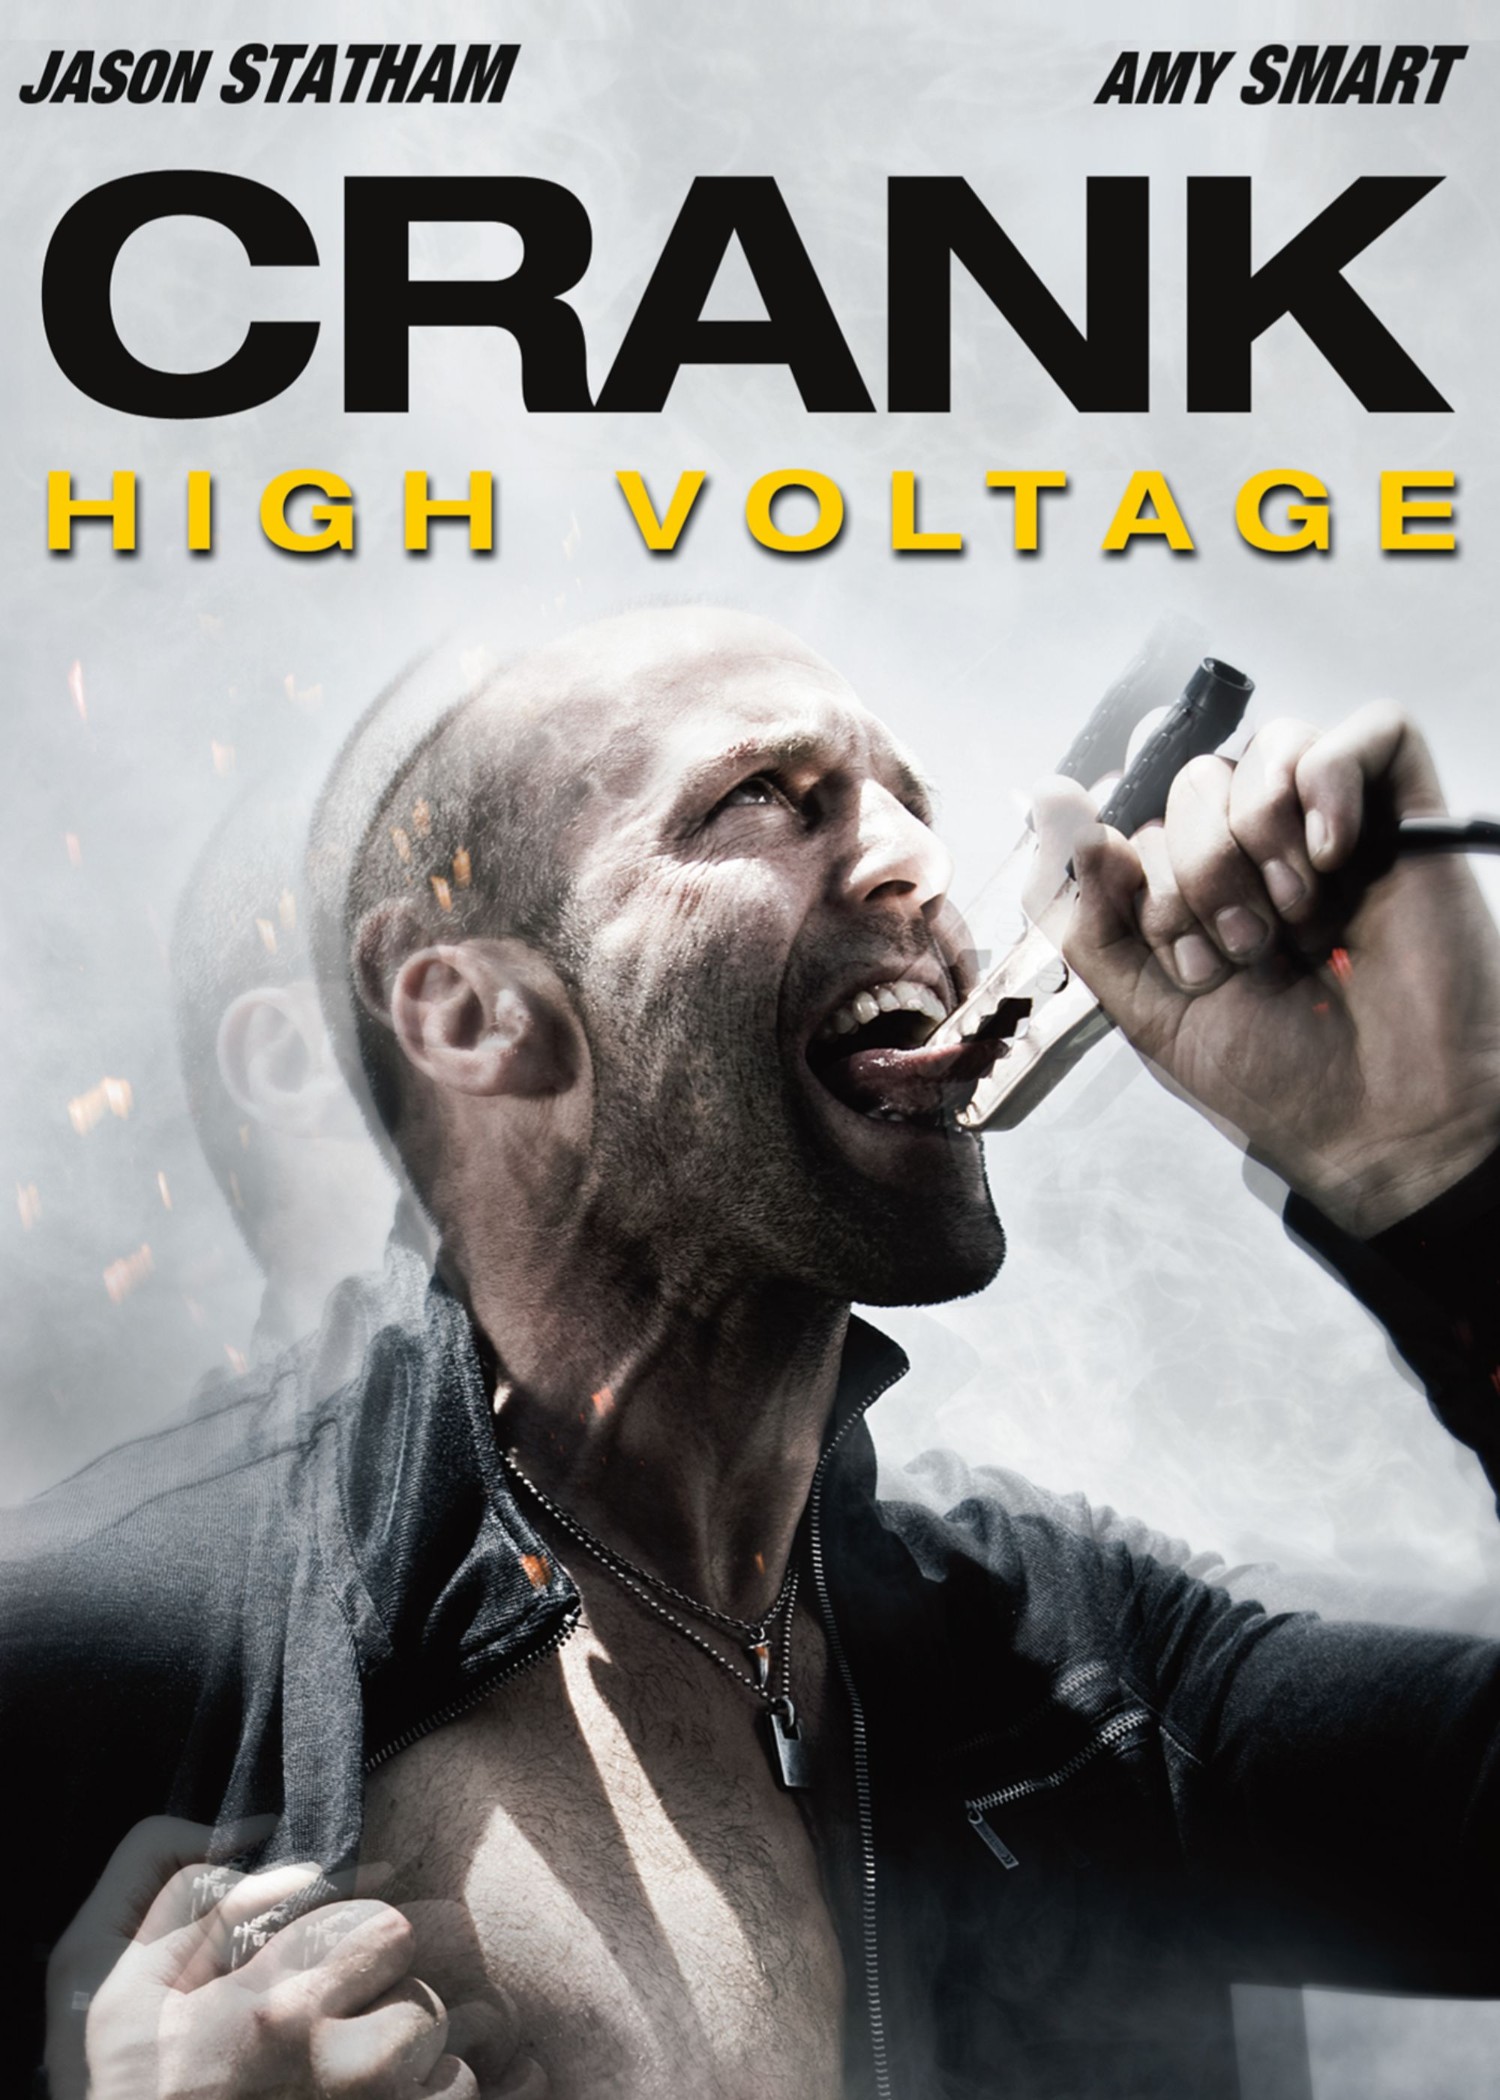 Crank / Crank 2: High Voltage